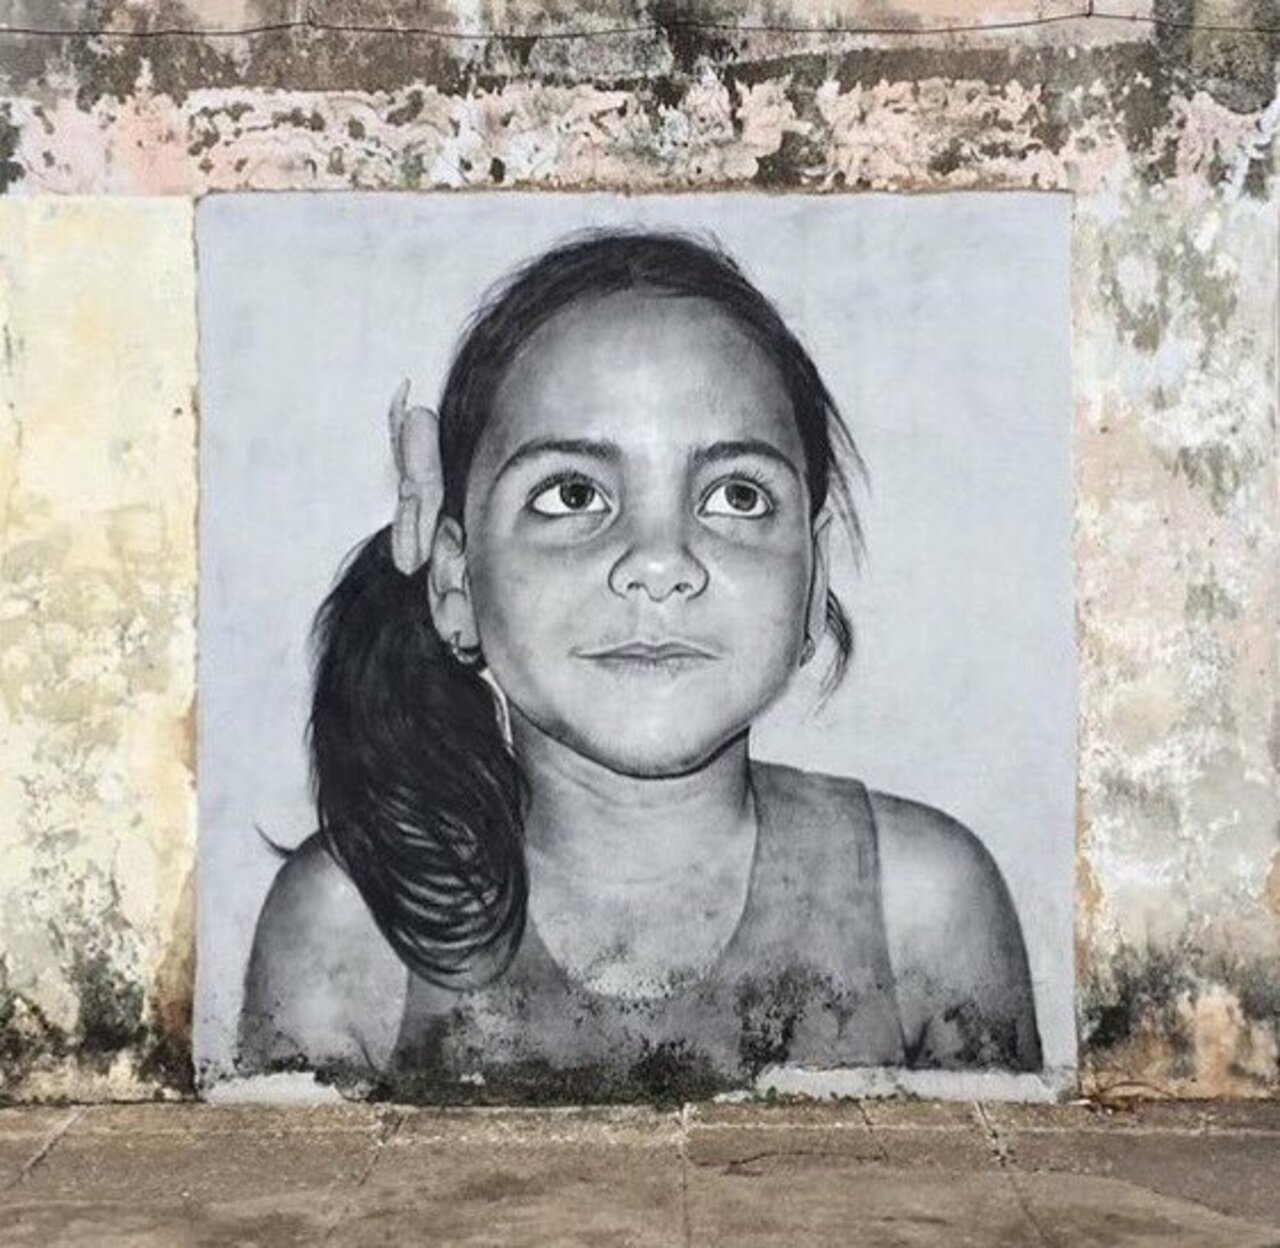 #mural by Maisel Lopez #Havana #Cuba #art #graffiti #streetart https://t.co/FvTgksu8lN